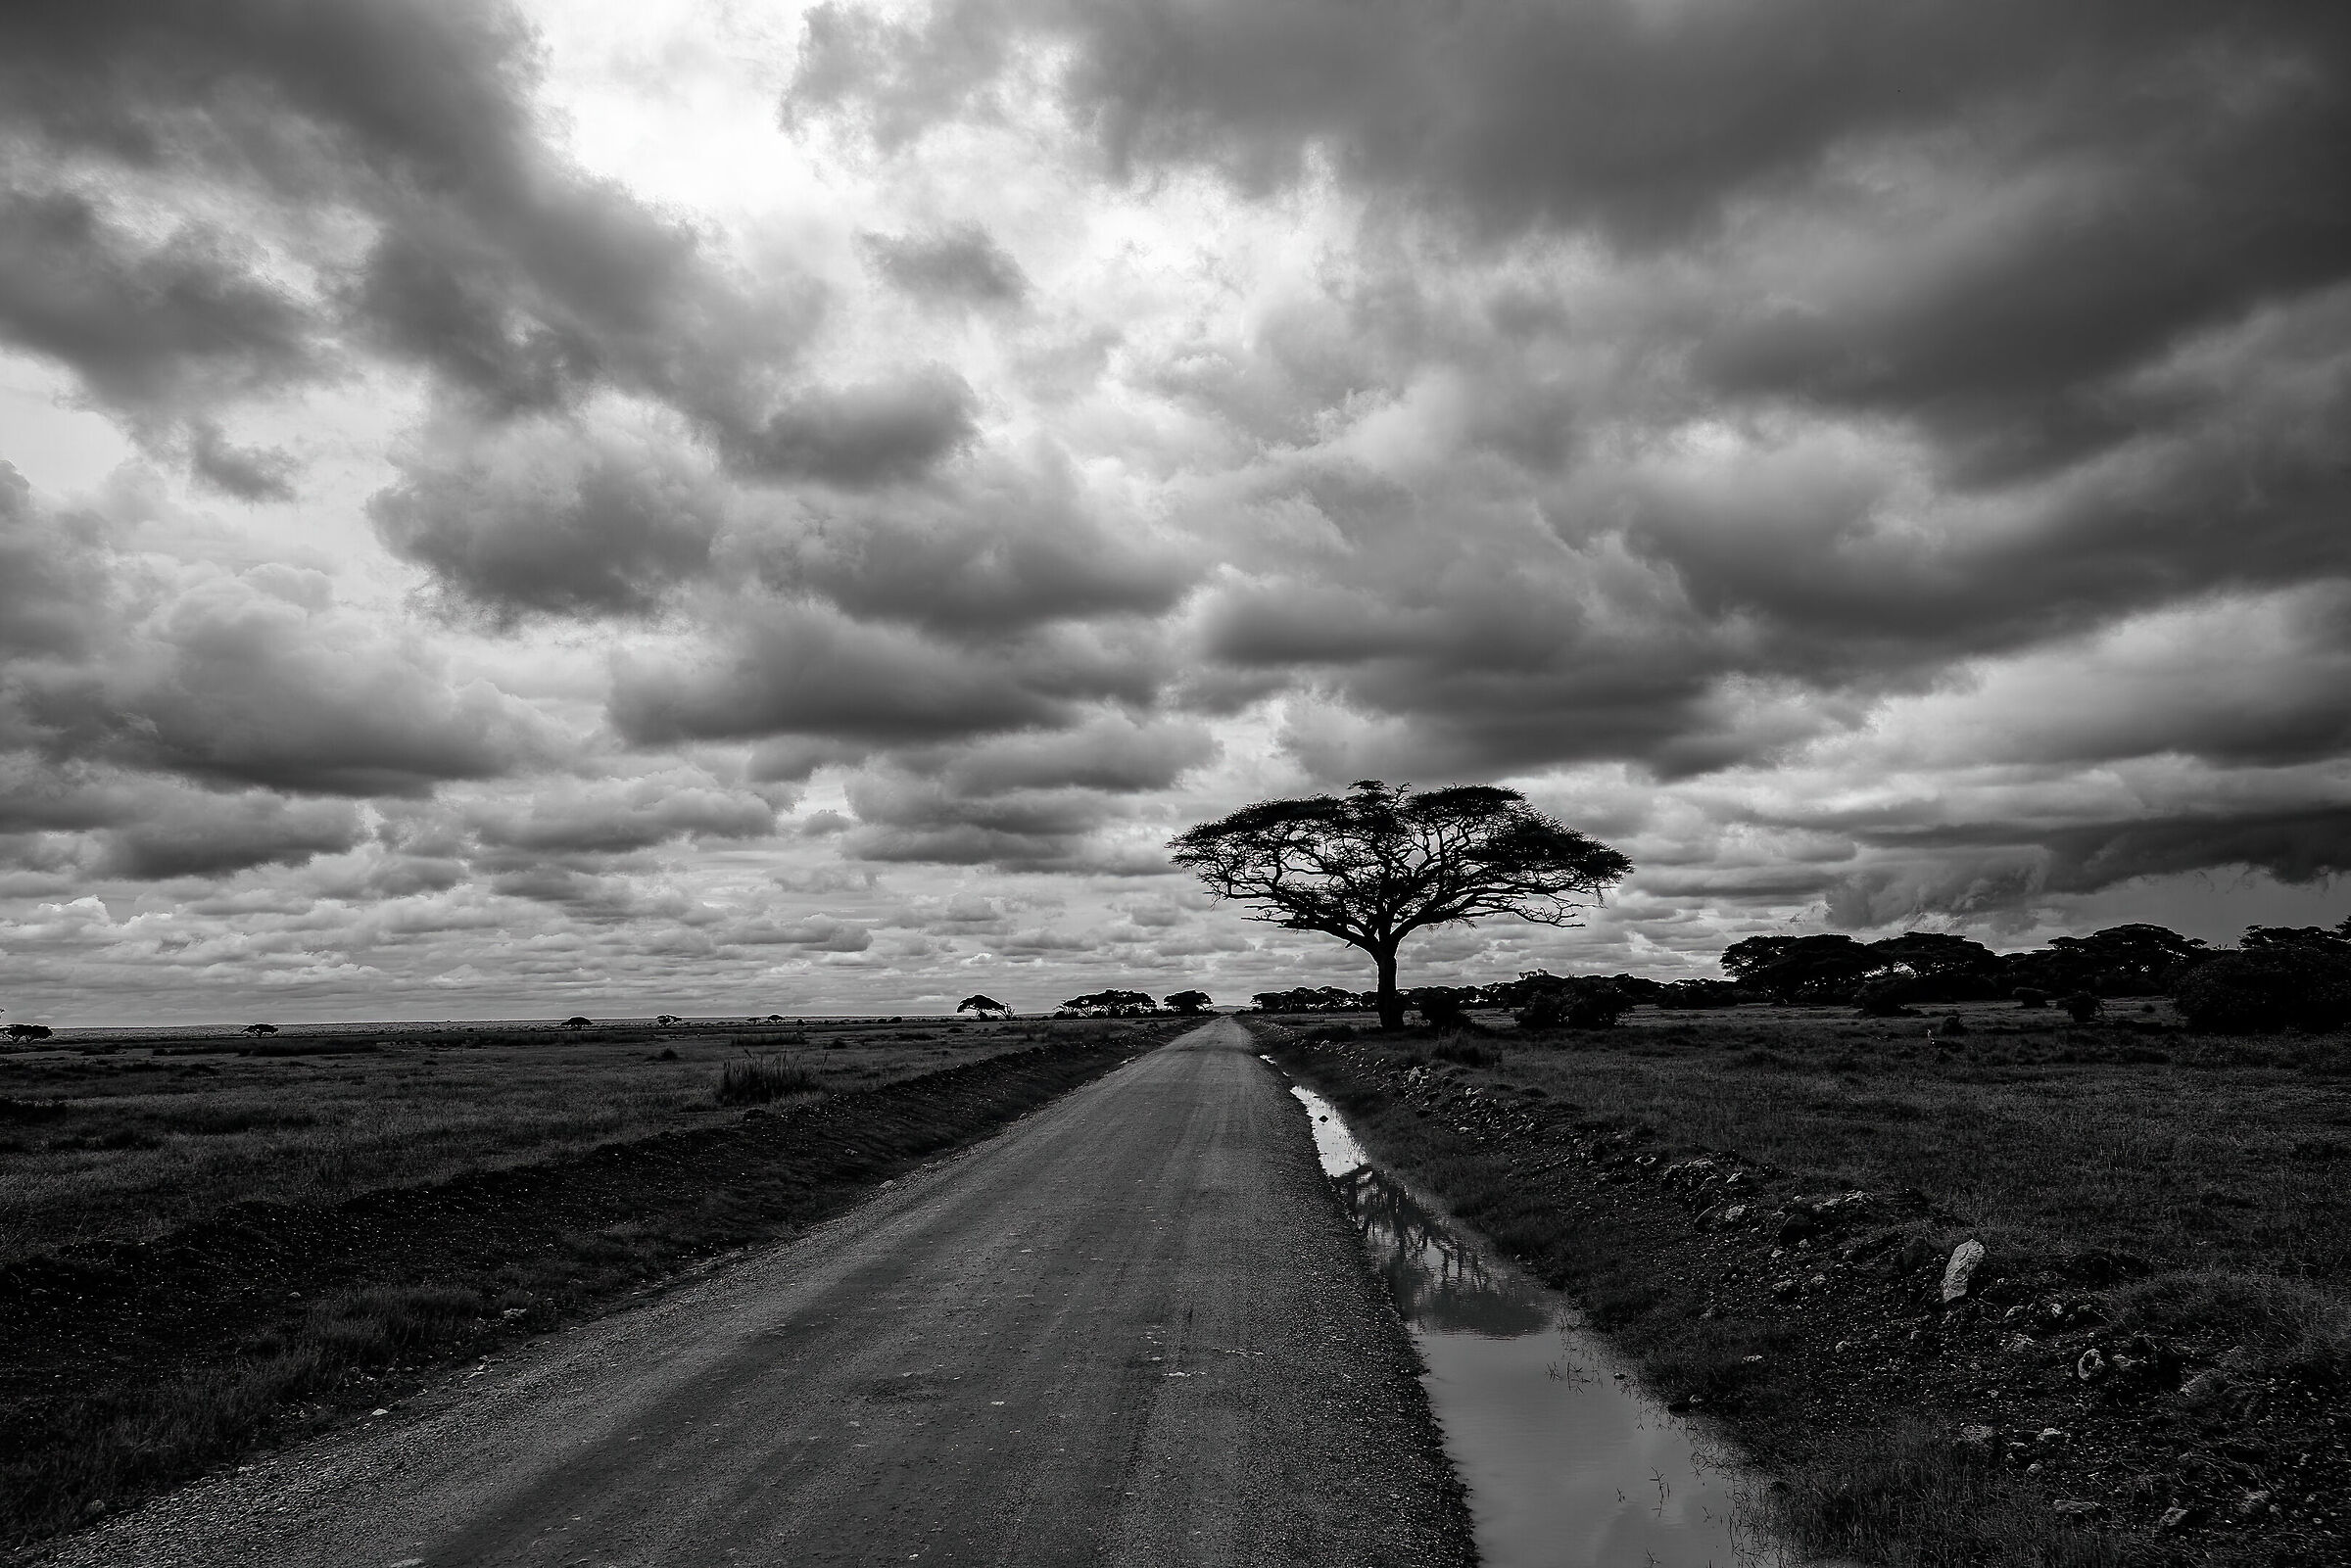 On the road of Amboseli...